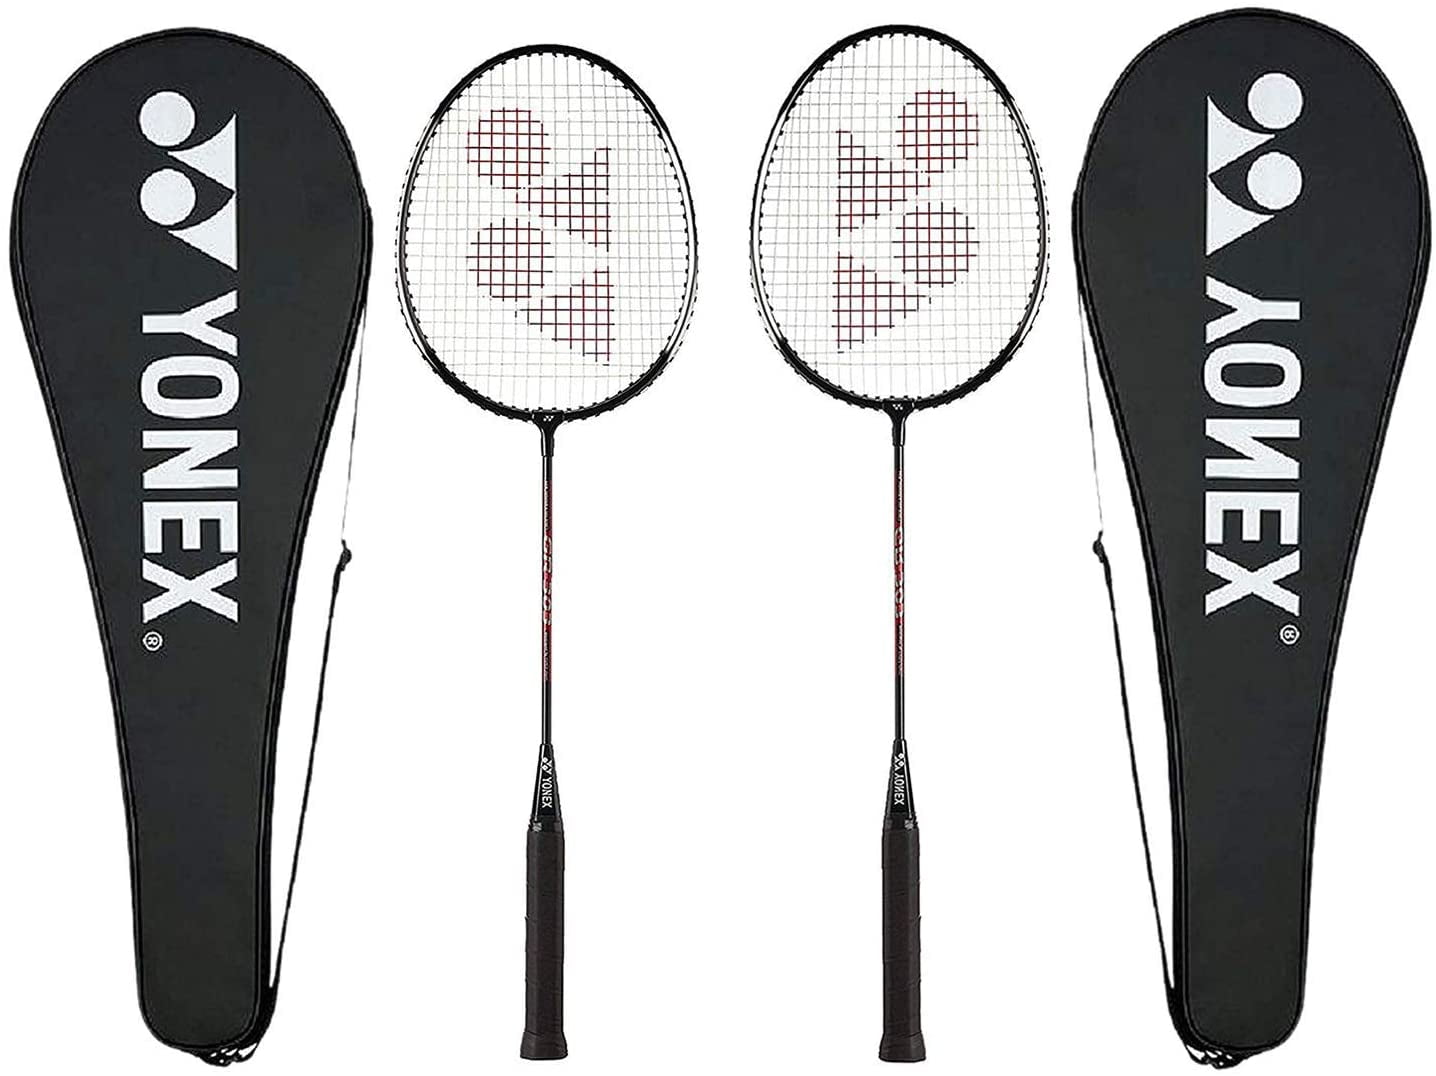 yonex badminton racket buy online